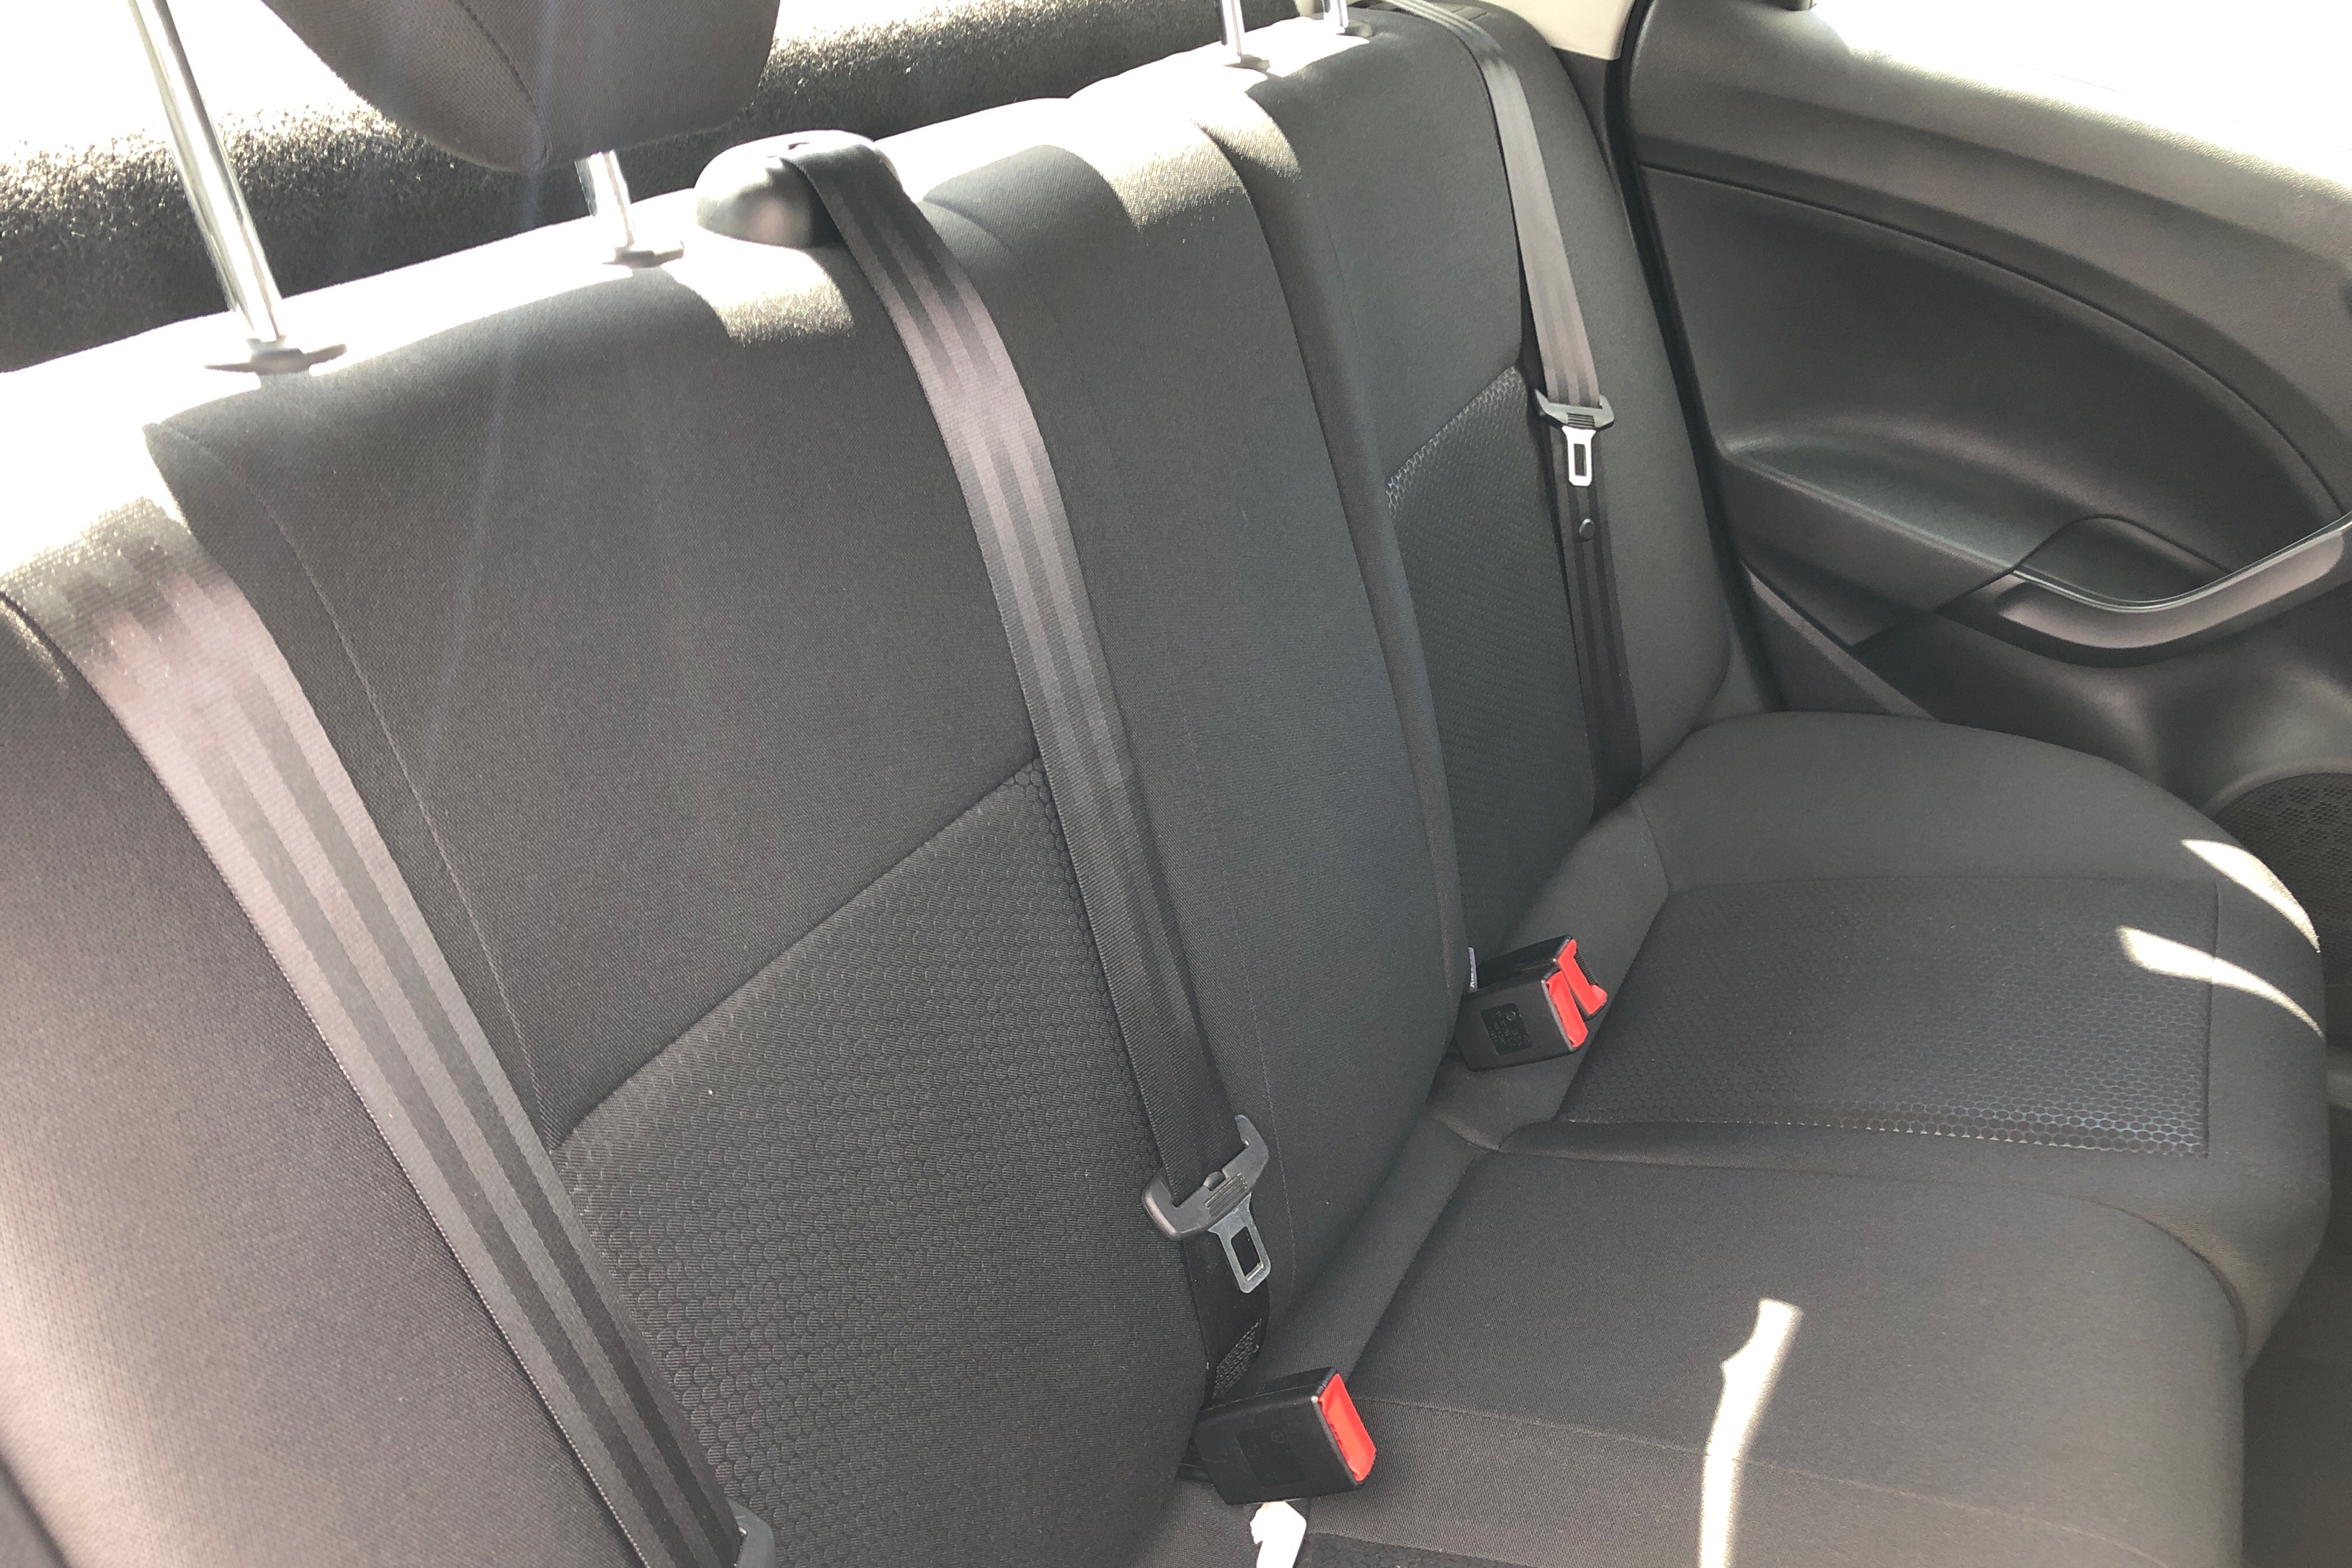 Seat Ibiza 1.2 TSI 90 FR Technology 5dr Image